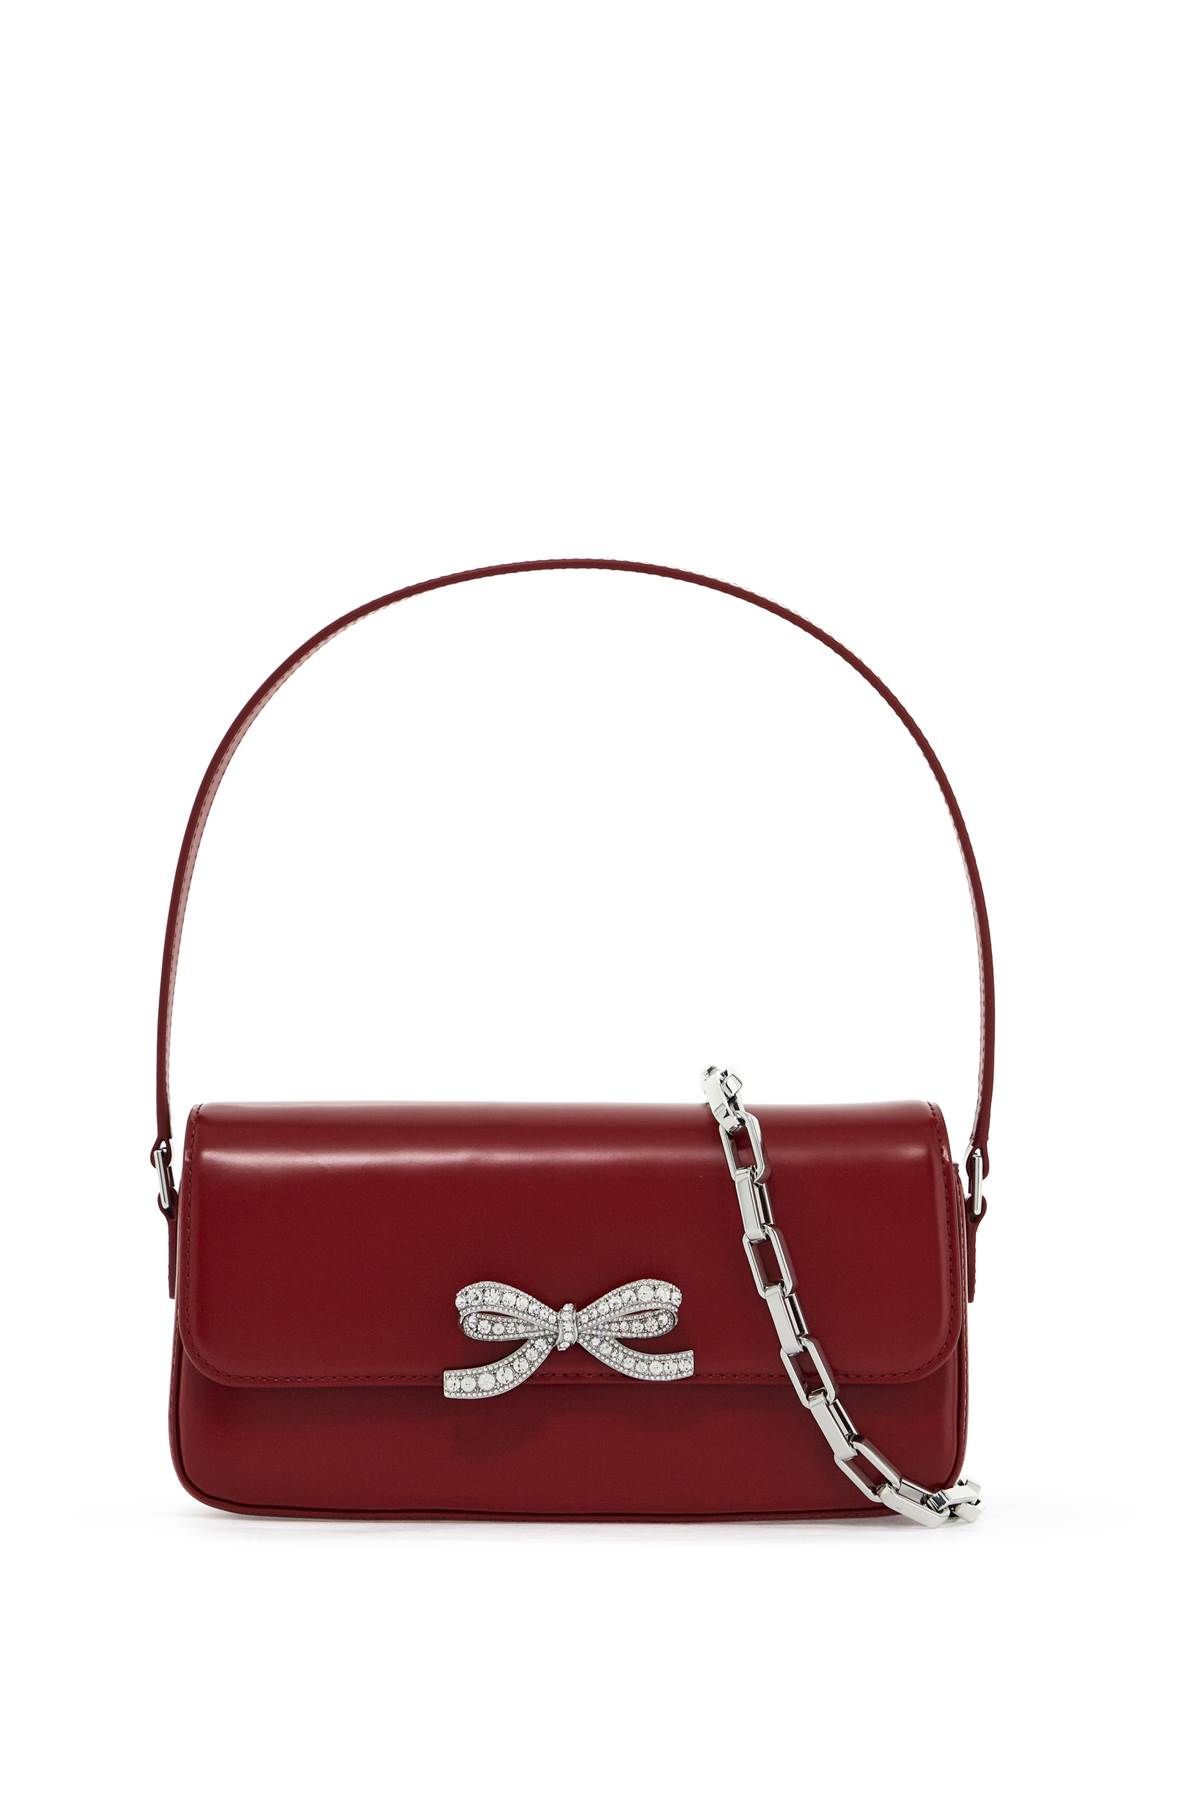  SELF PORTRAIT smooth leather baguette handbag